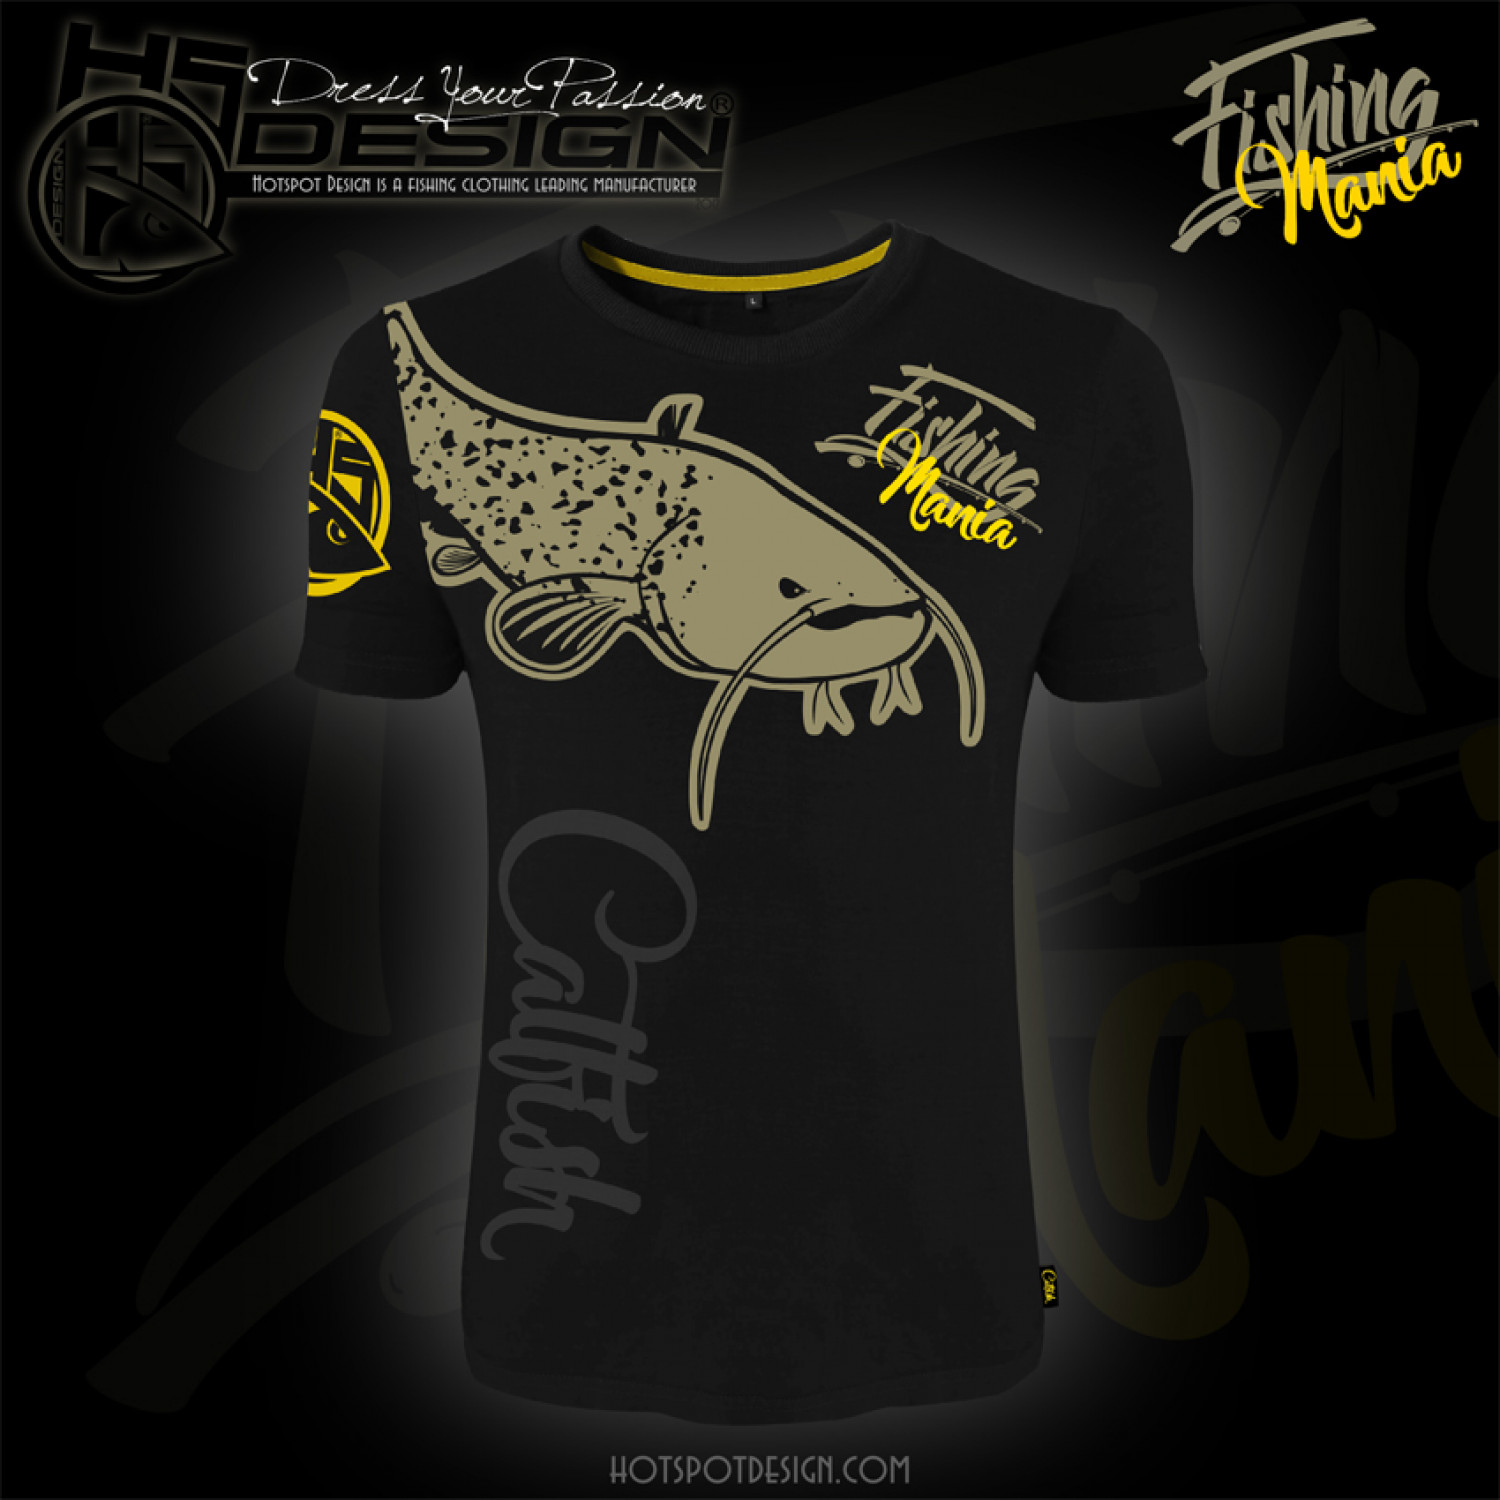 Hotspot Design T-Shirt Fishing Mania CATFISH Collection Mania schwarz gelb 